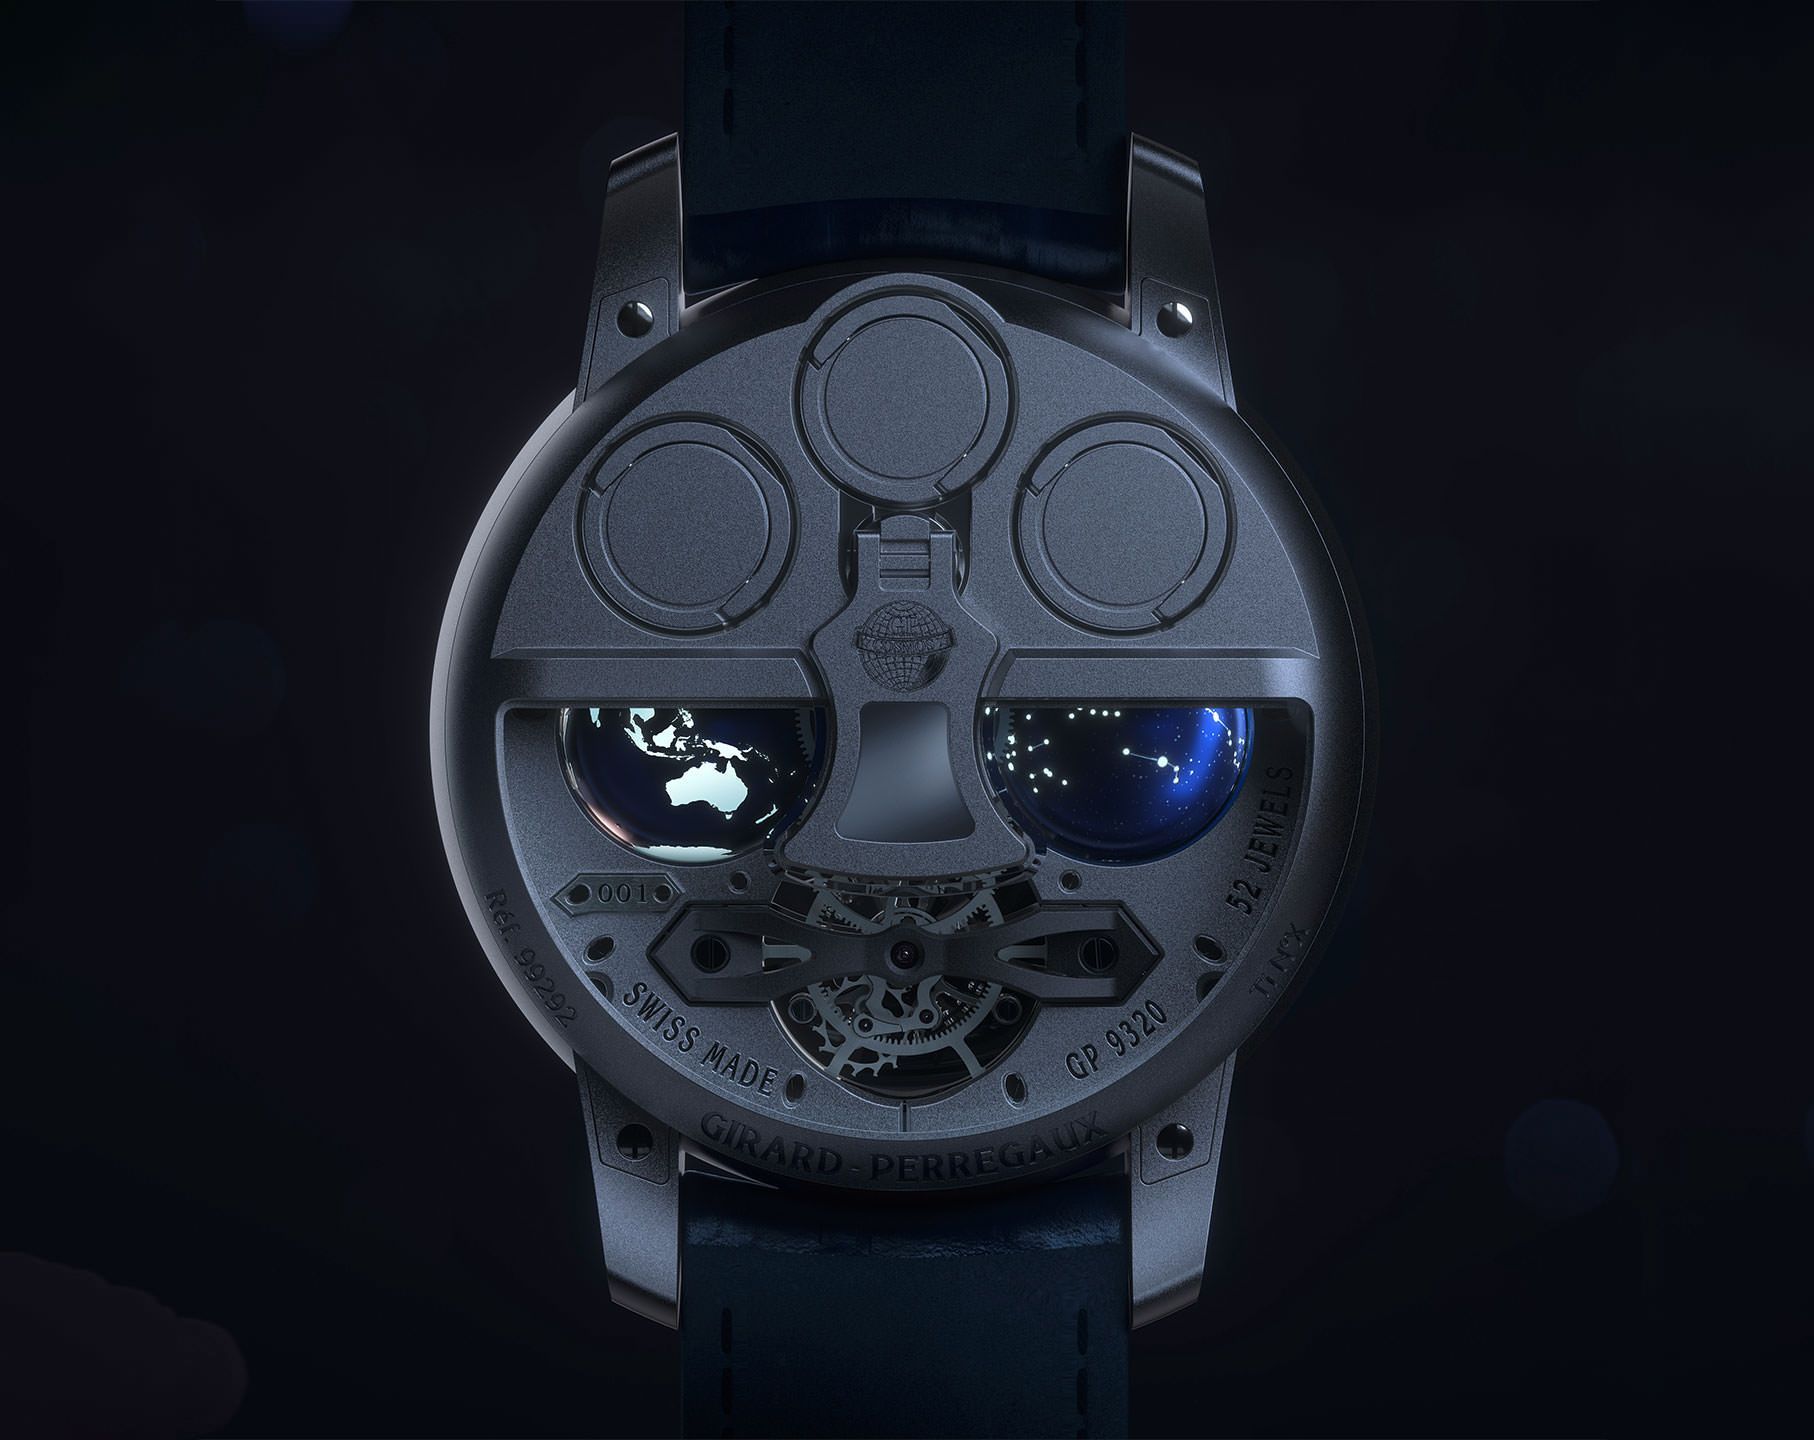 Girard-Perregaux Tourbillon 47 mm Watch in Skeleton Dial For Men - 5